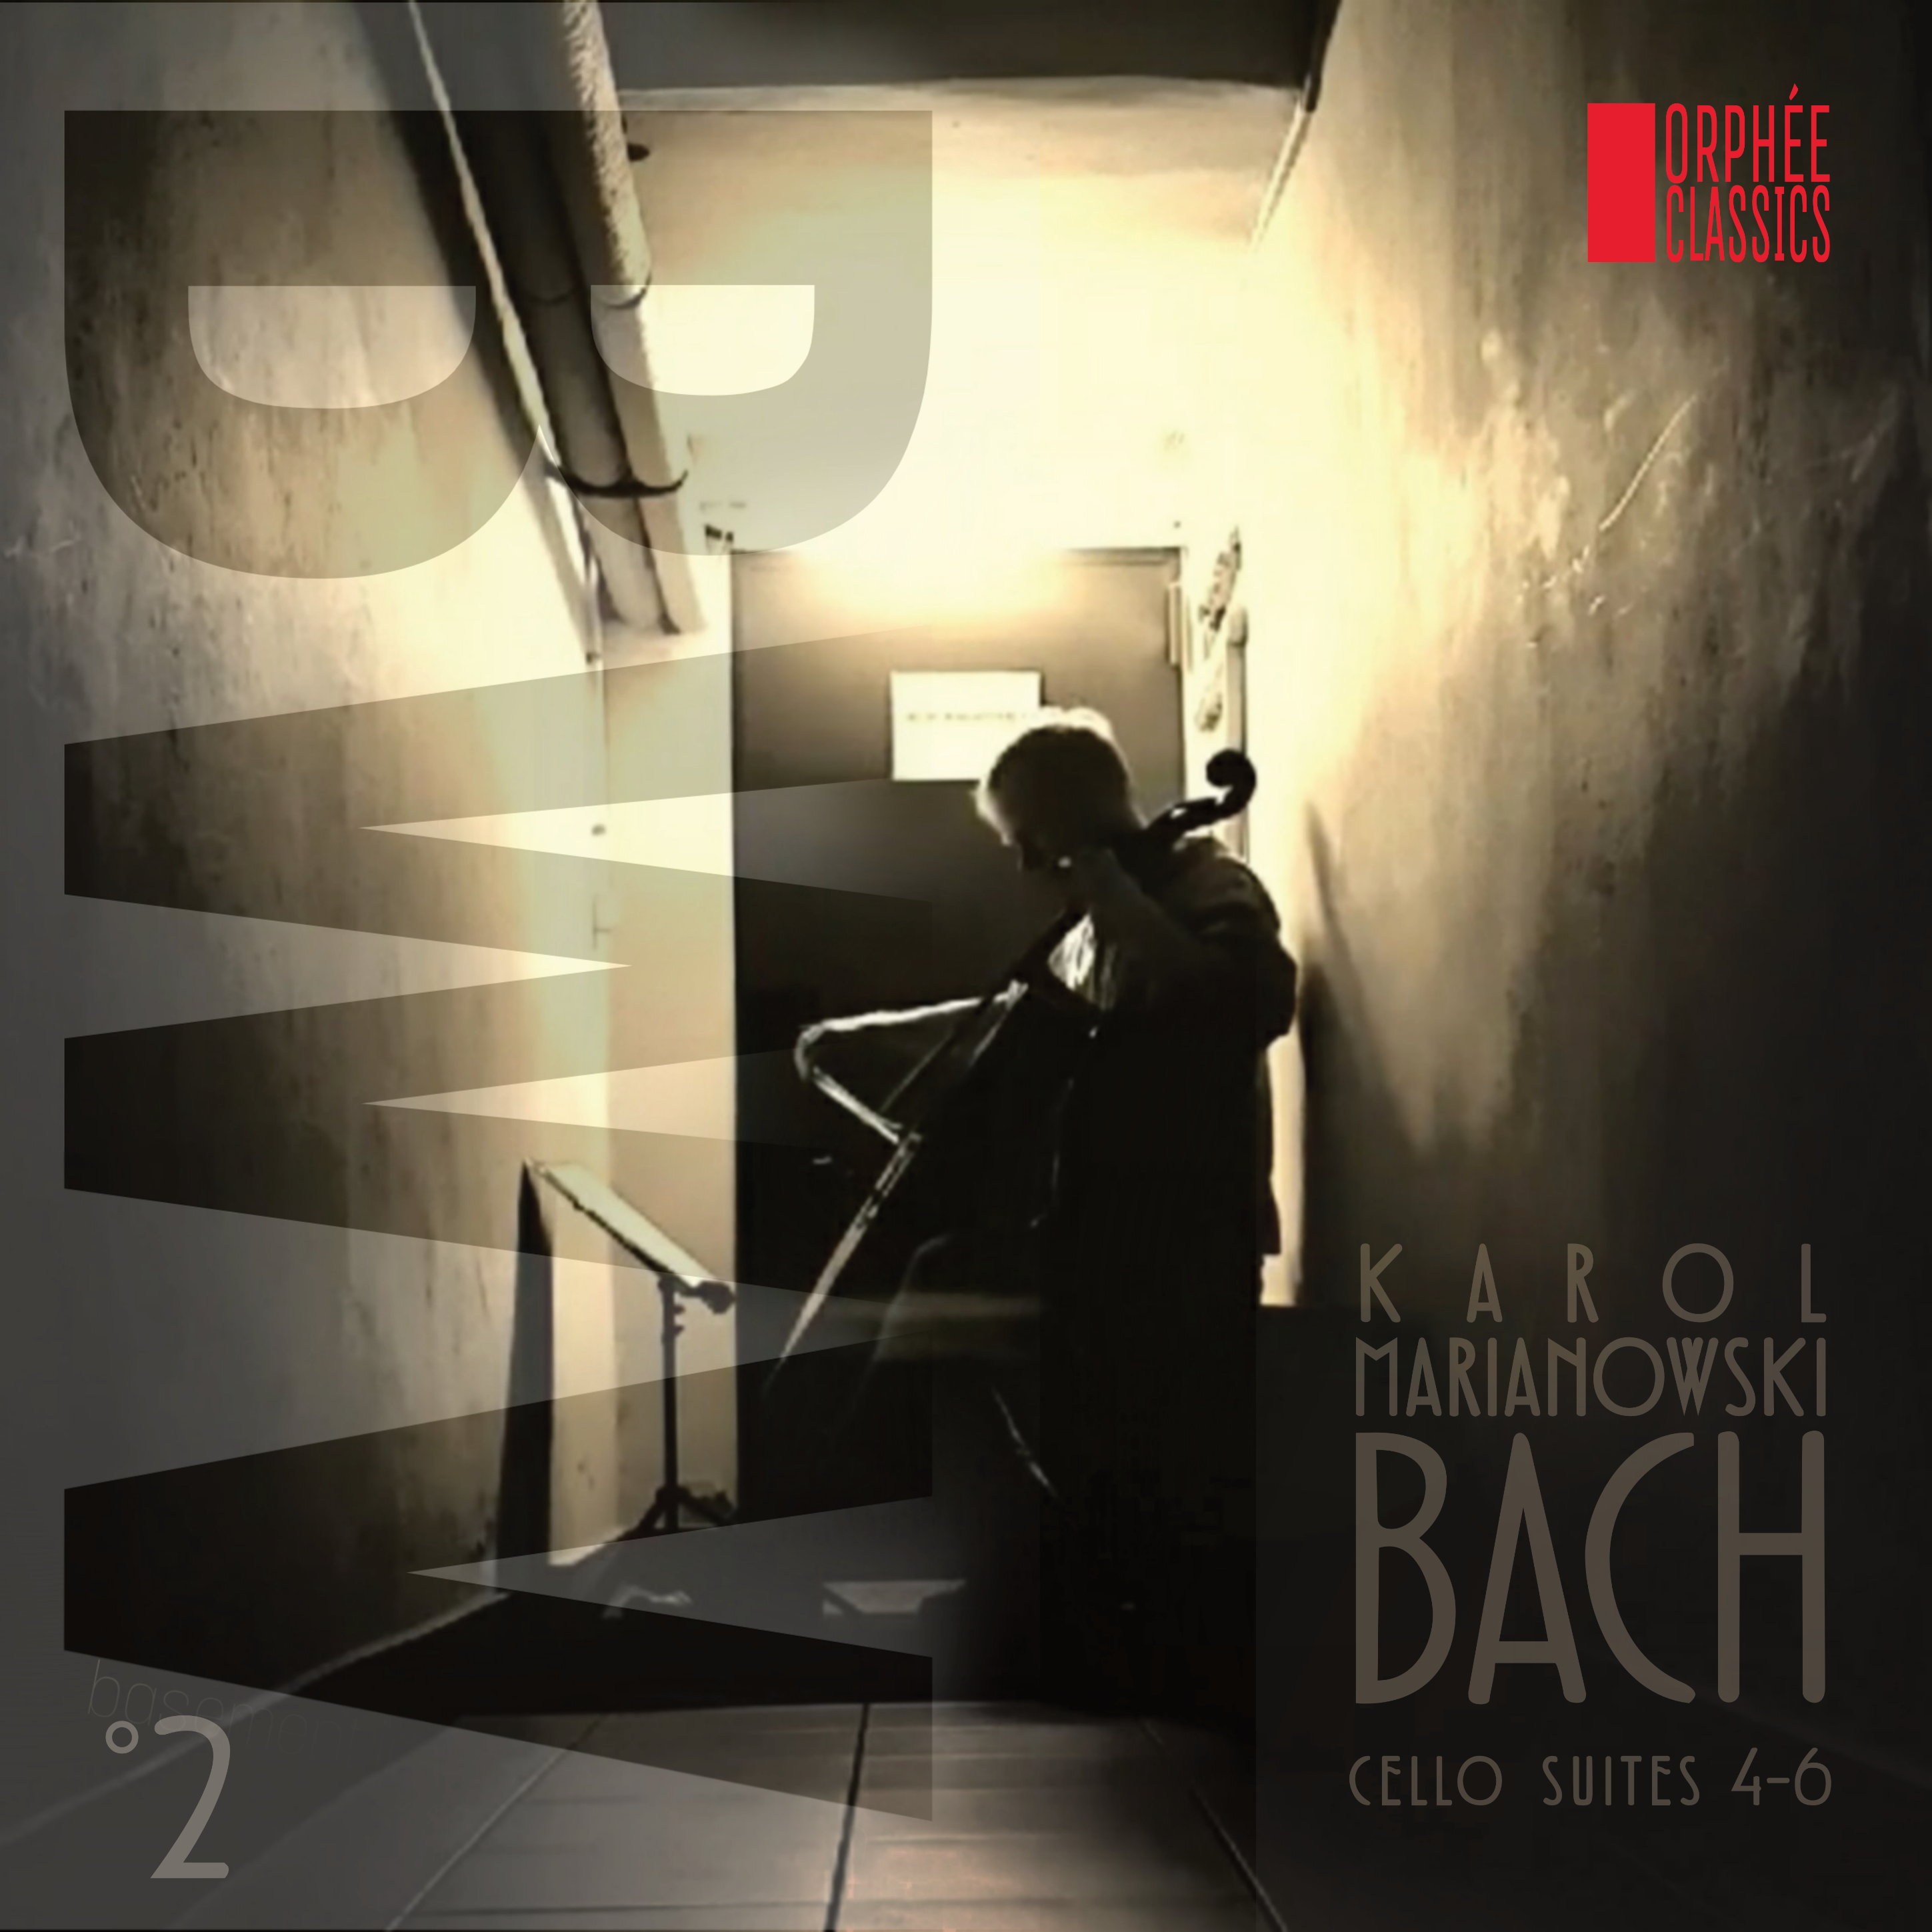 BWV #2